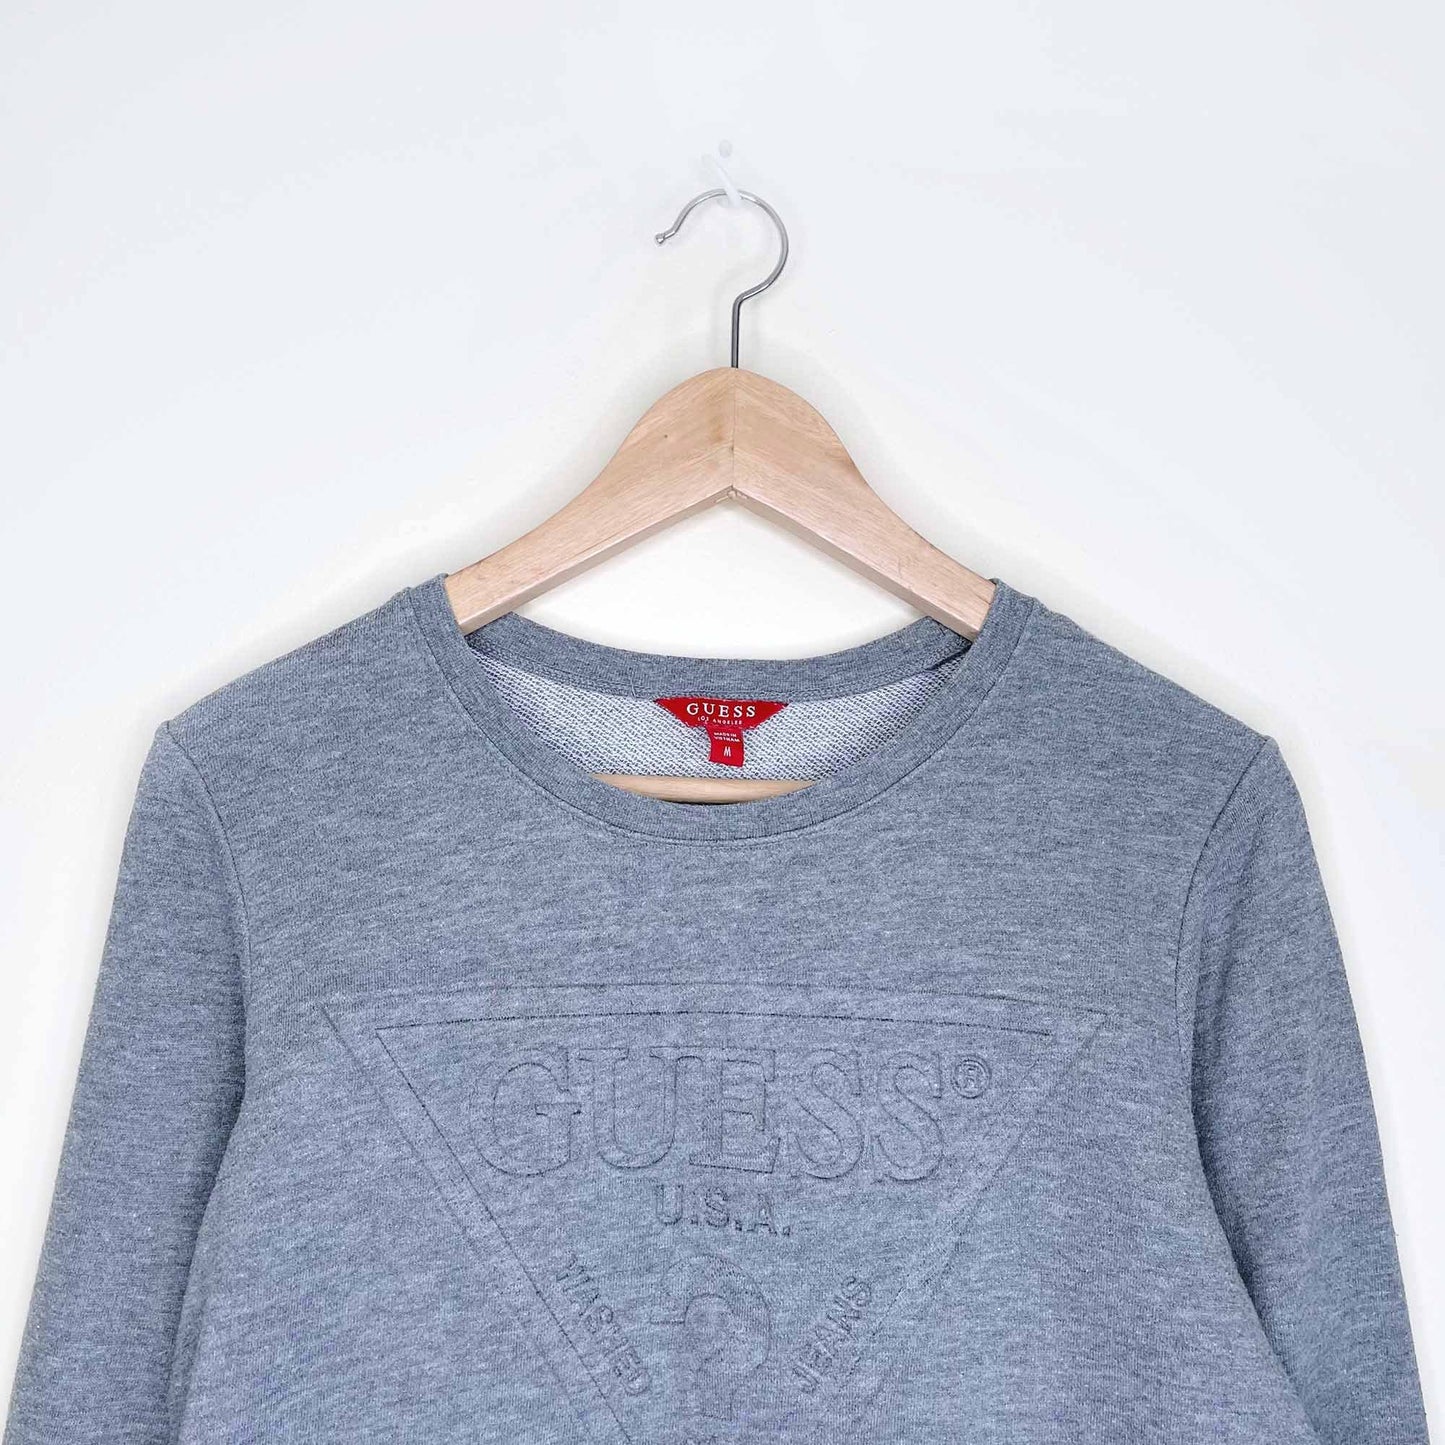 guess impression triangle logo crewneck sweatshirt - size medium